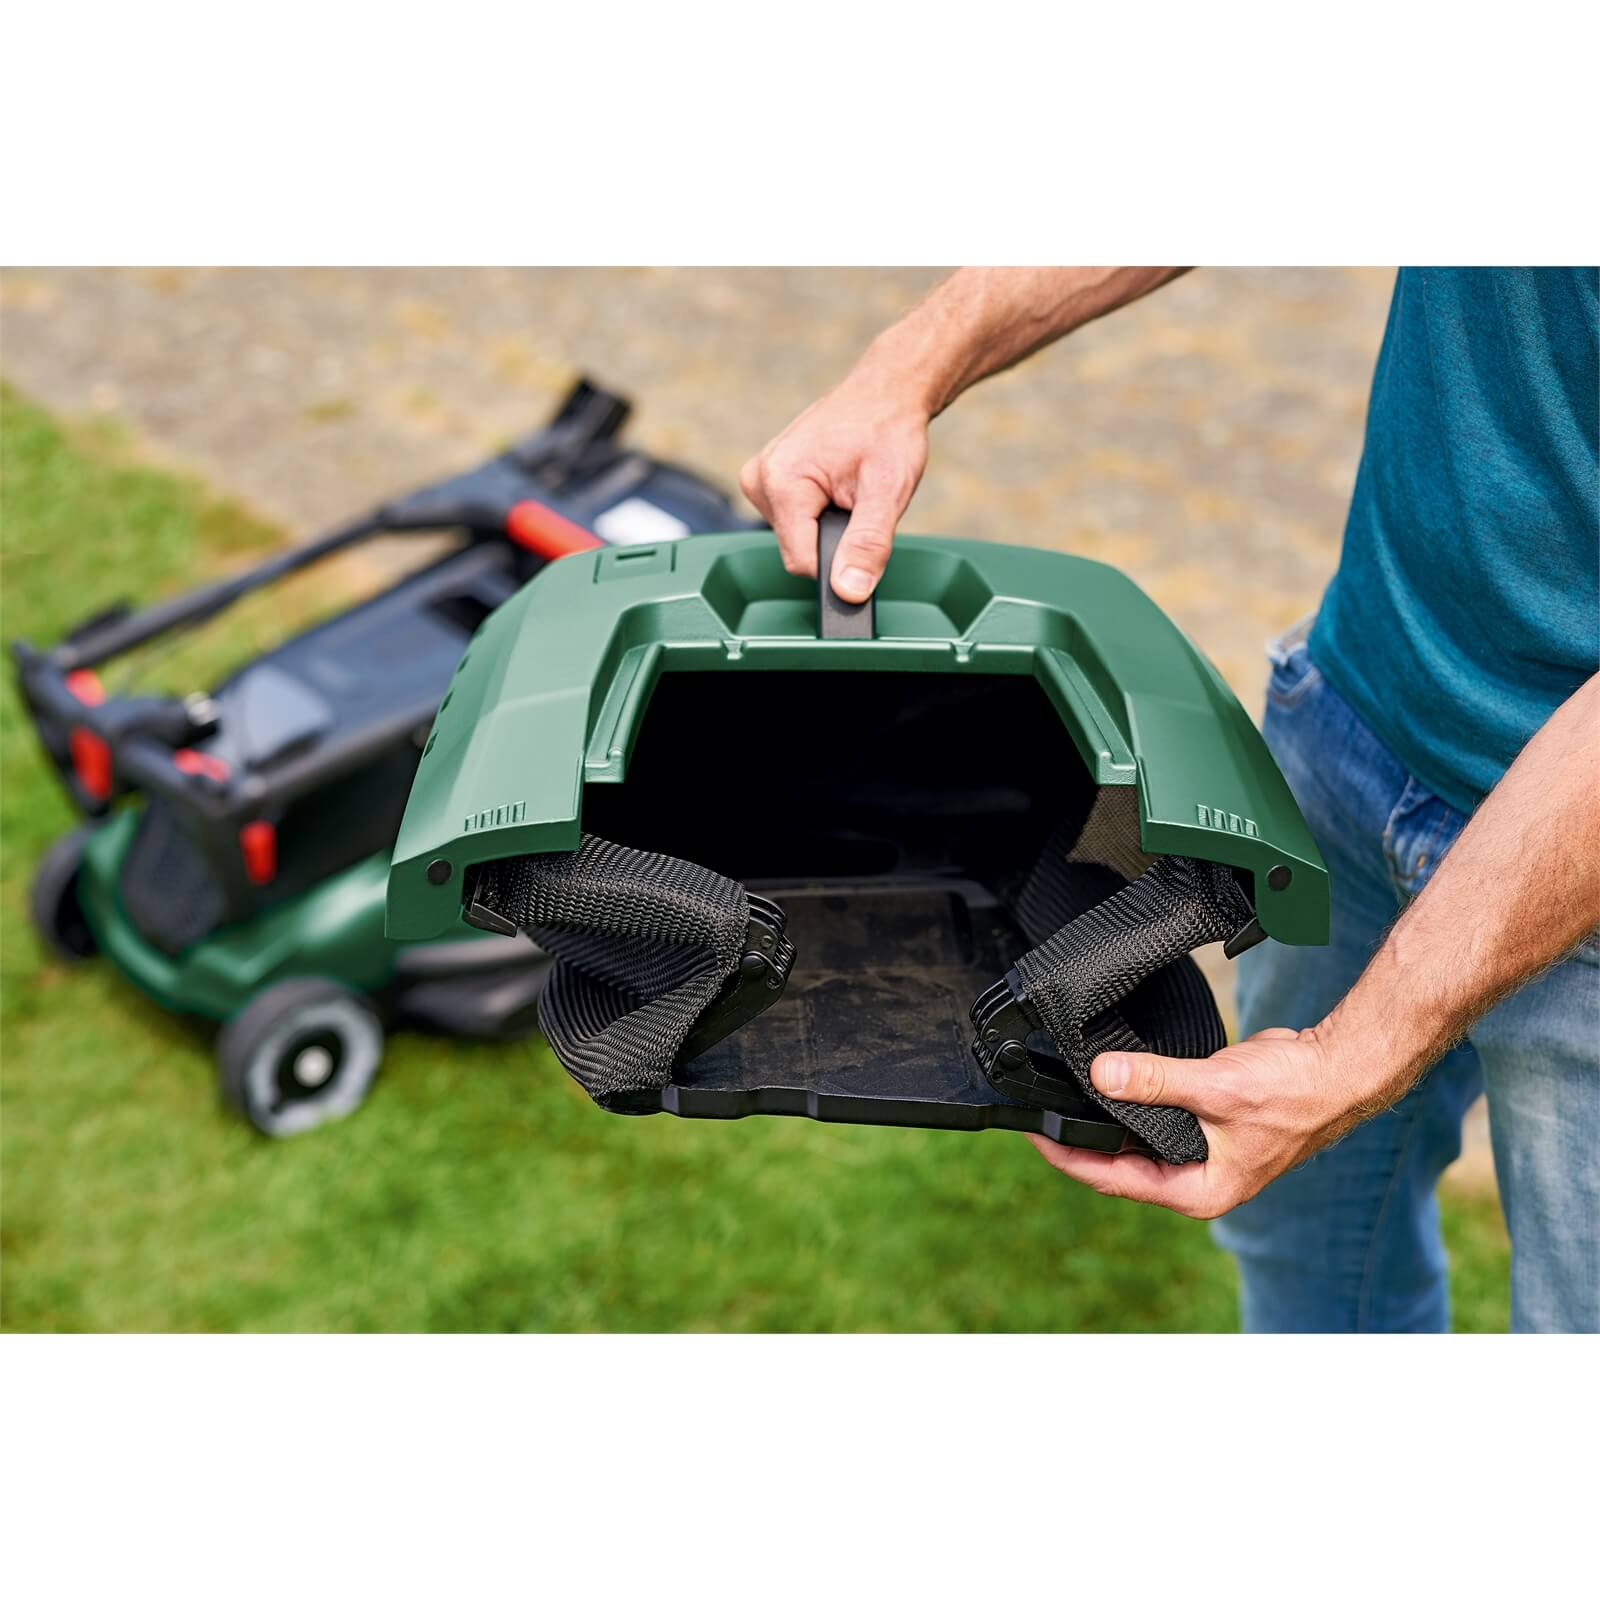 Bosch Advancedrotak 750 Rotary Noise Reduction Lawn Mower